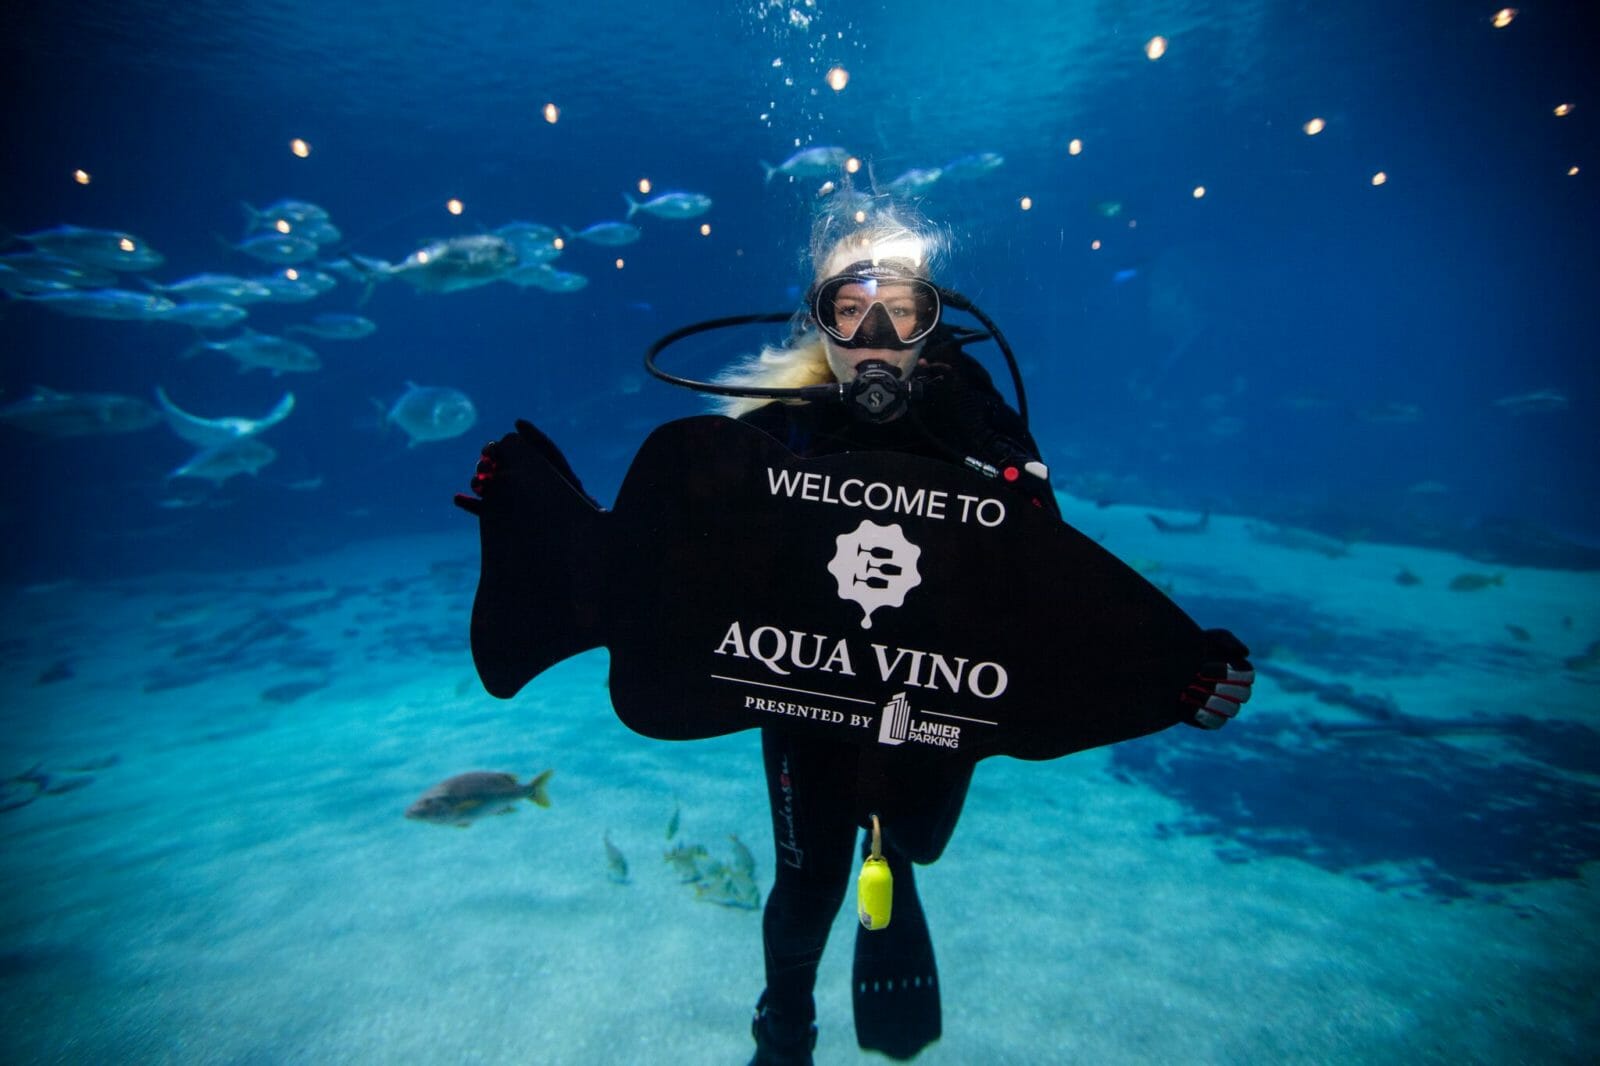 Aqua Vino at the Aquarium Concierge Services of Atlanta